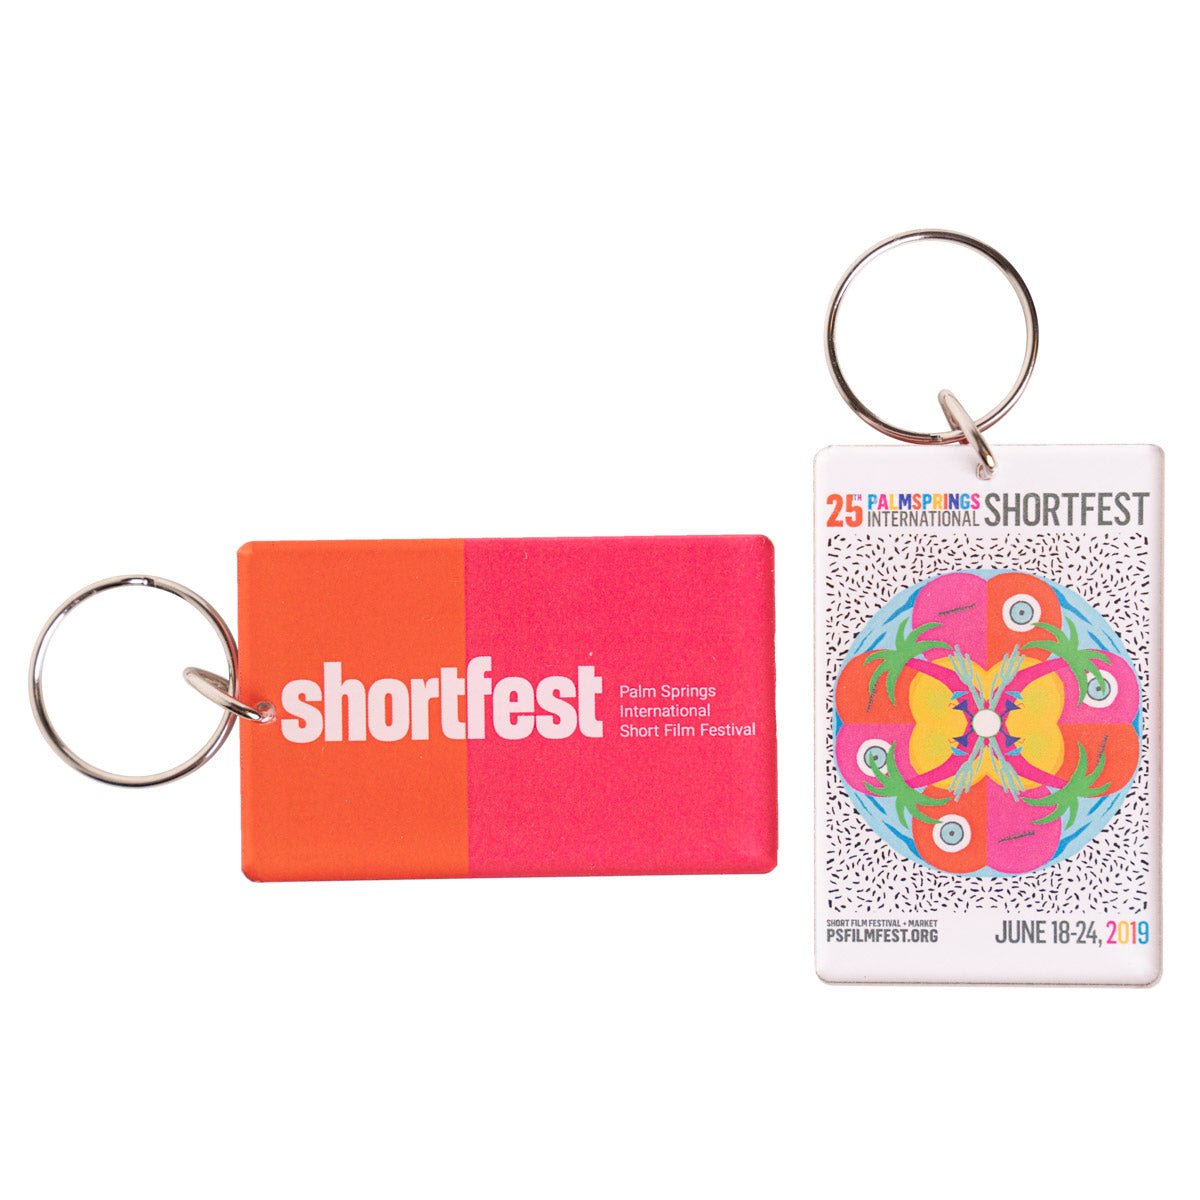 ShortFest 2019 Acrylic Key Chain Tag / Key Ring - Destination PSP